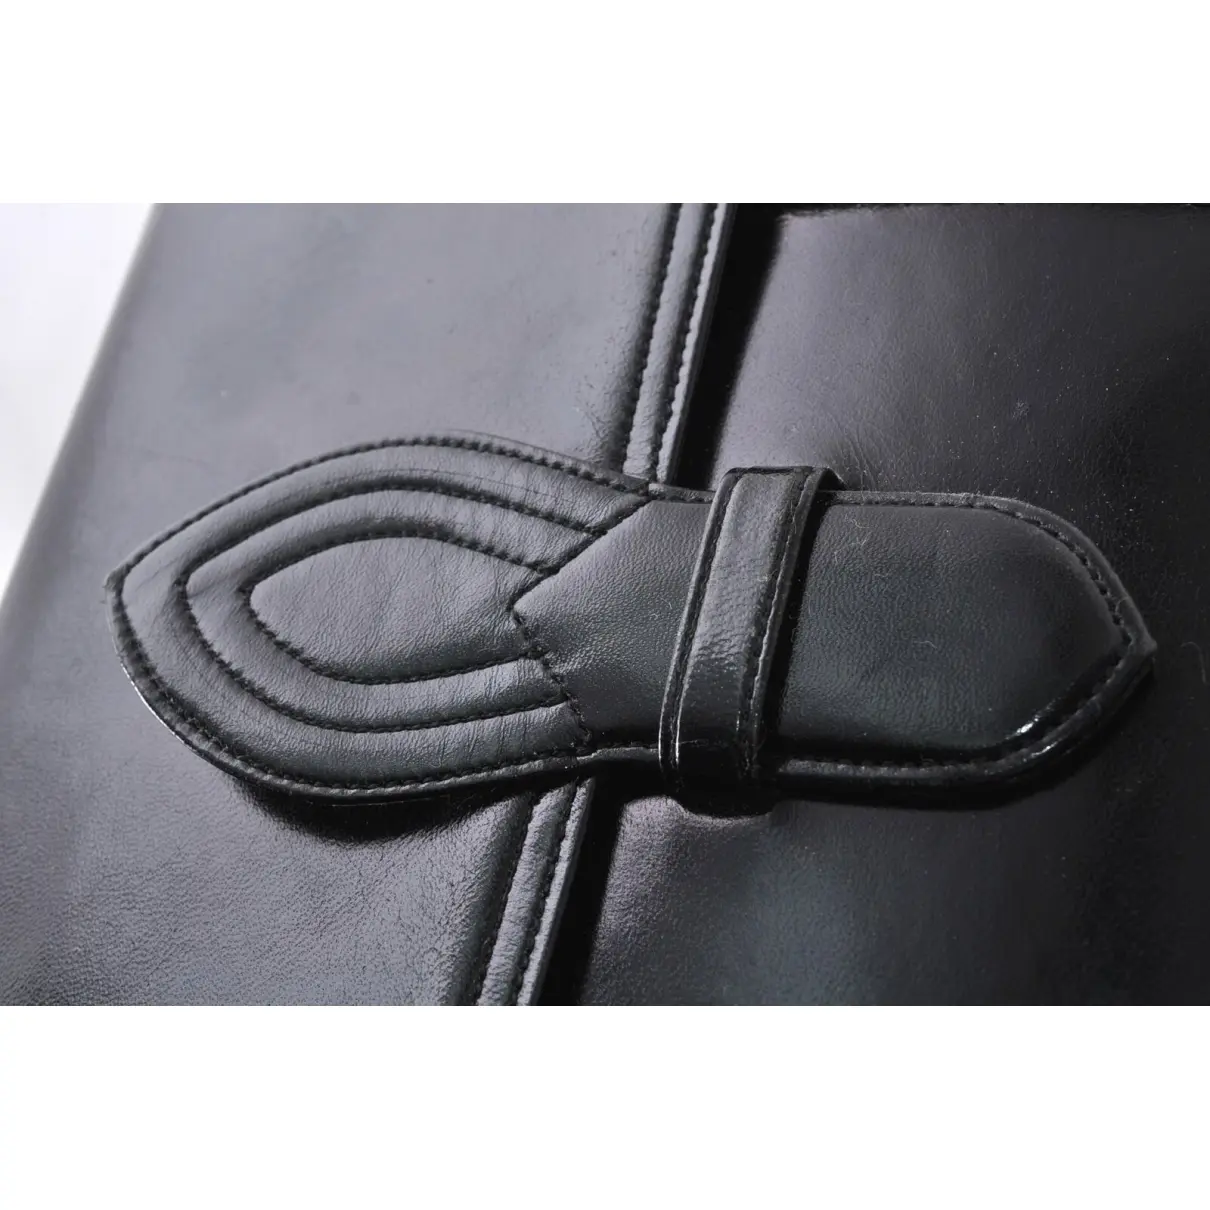 Leather clutch bag Yves Saint Laurent